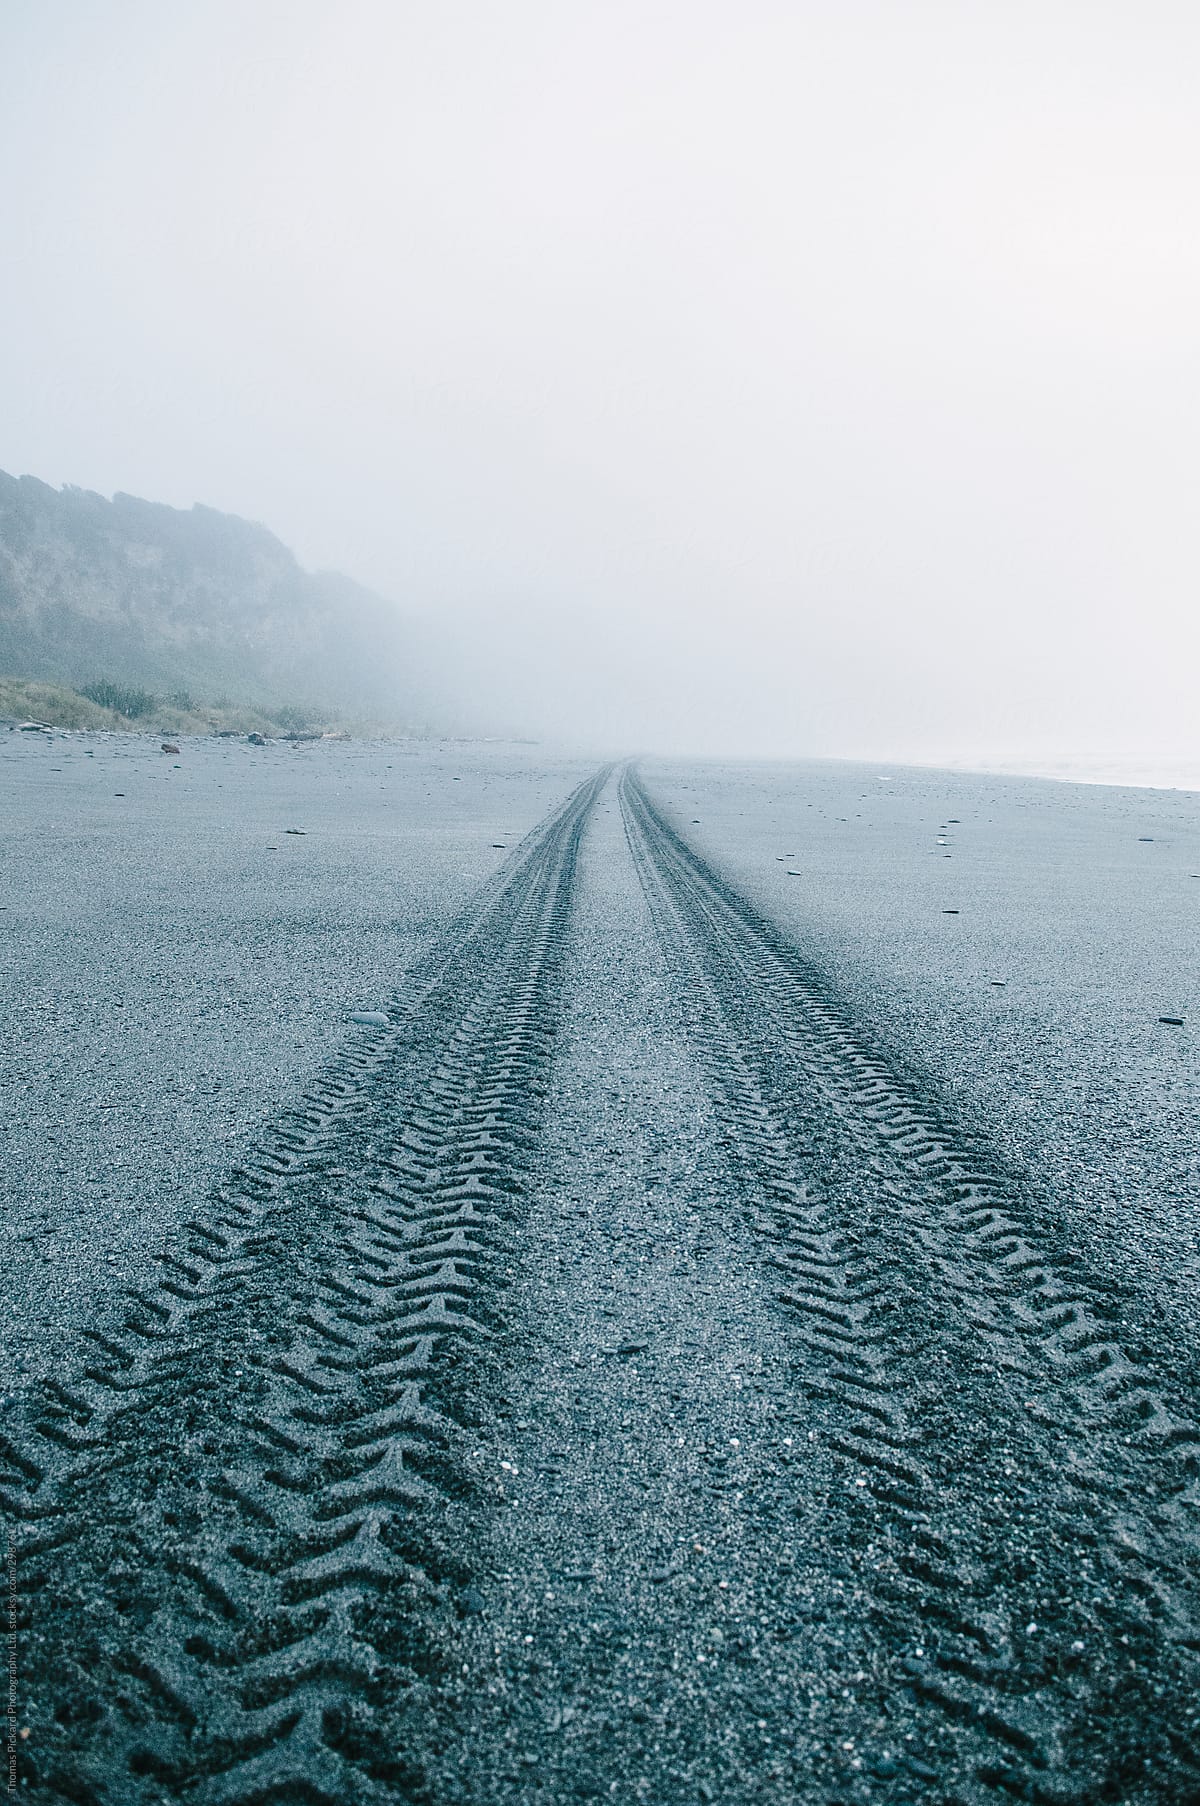 Vehicle tracks on a beach, West Coast, New Zealand.